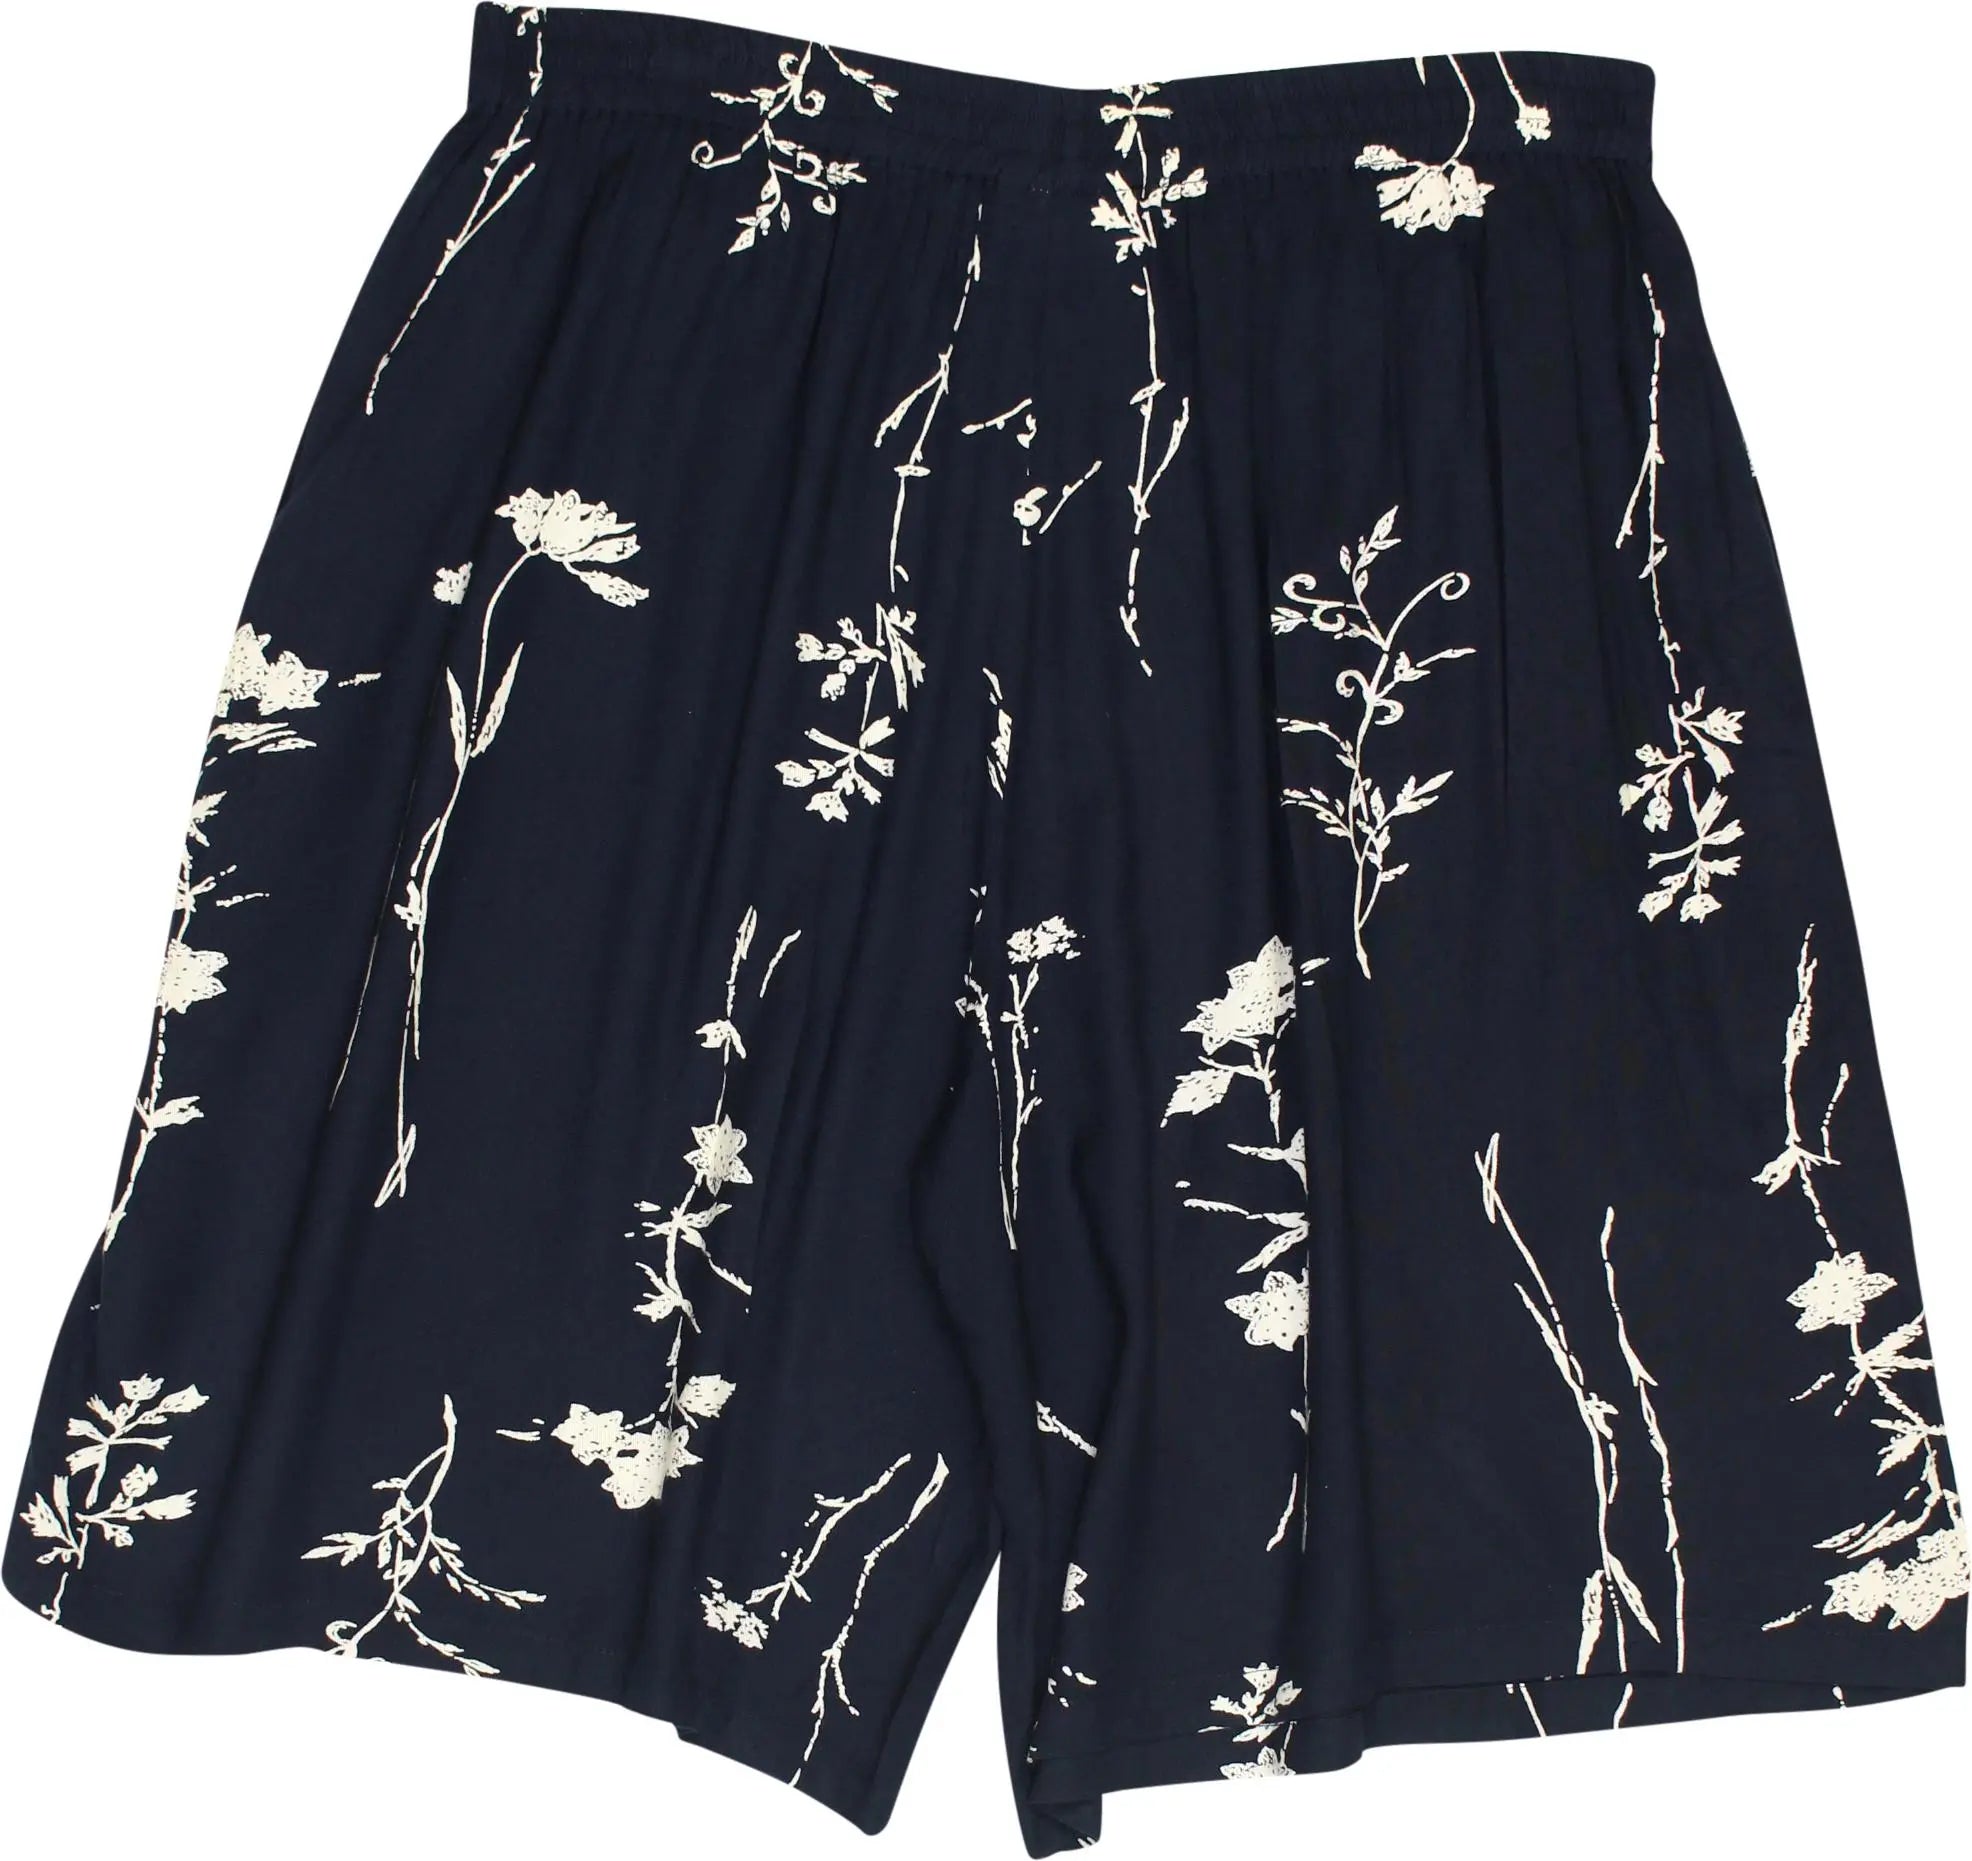 Bleu Bonheur - High Waisted Shorts- ThriftTale.com - Vintage and second handclothing